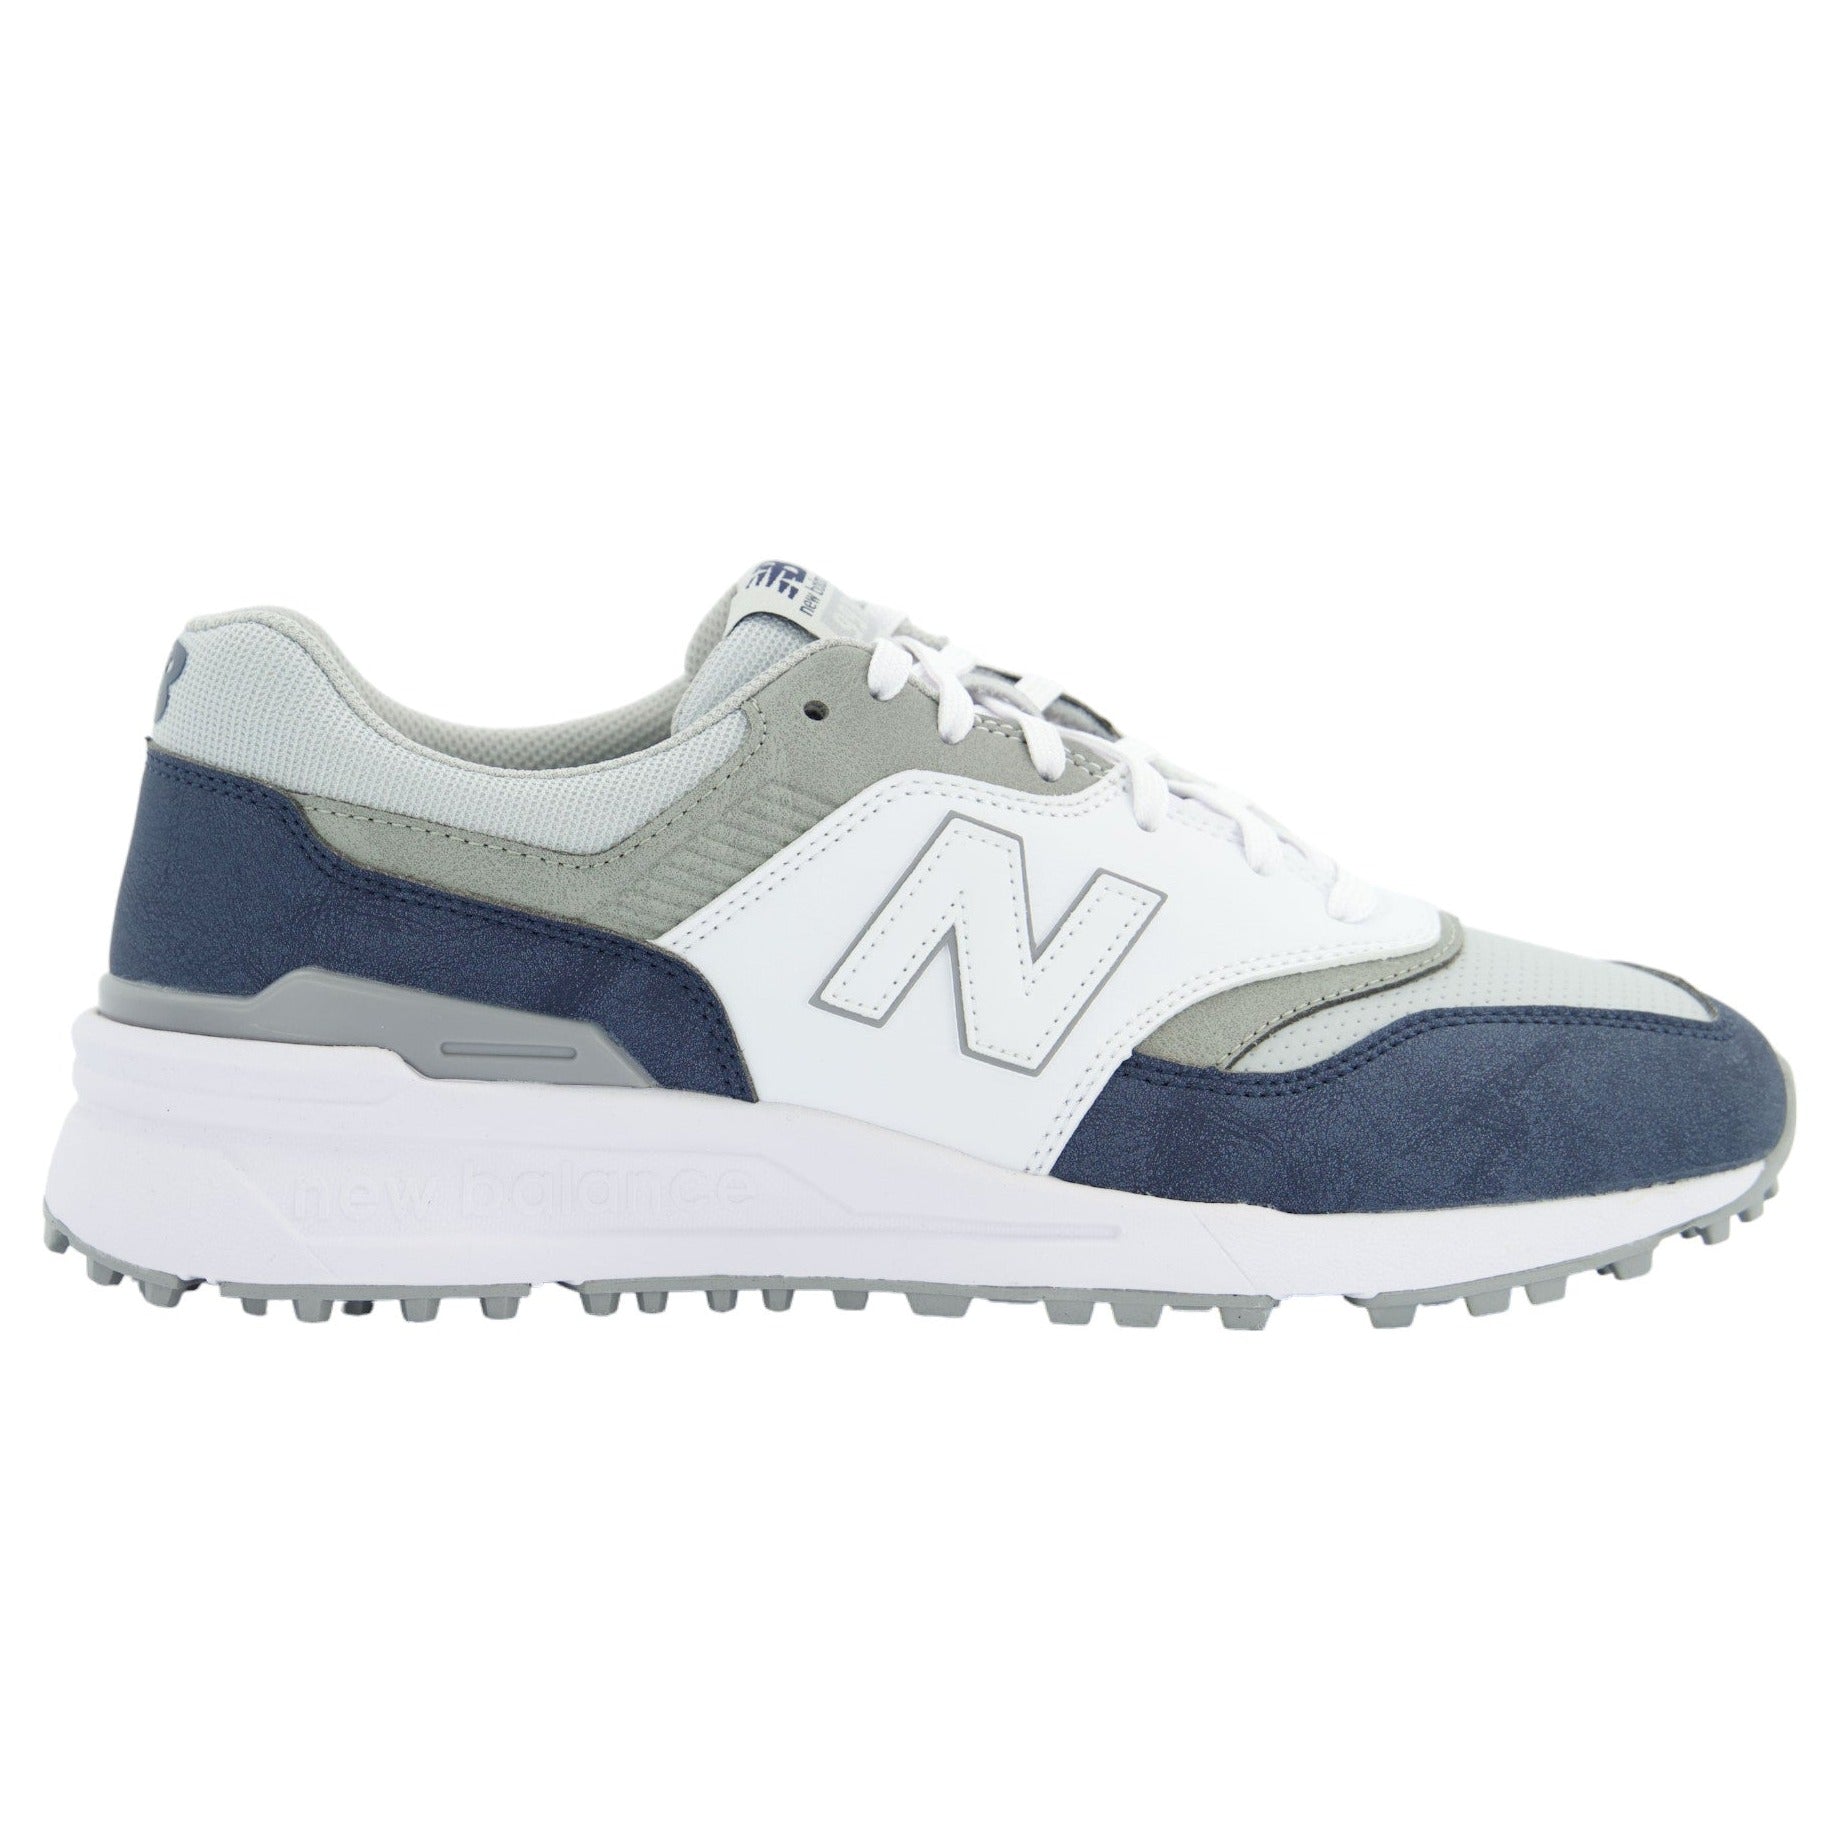 New Balance 997 SL Golf Shoes